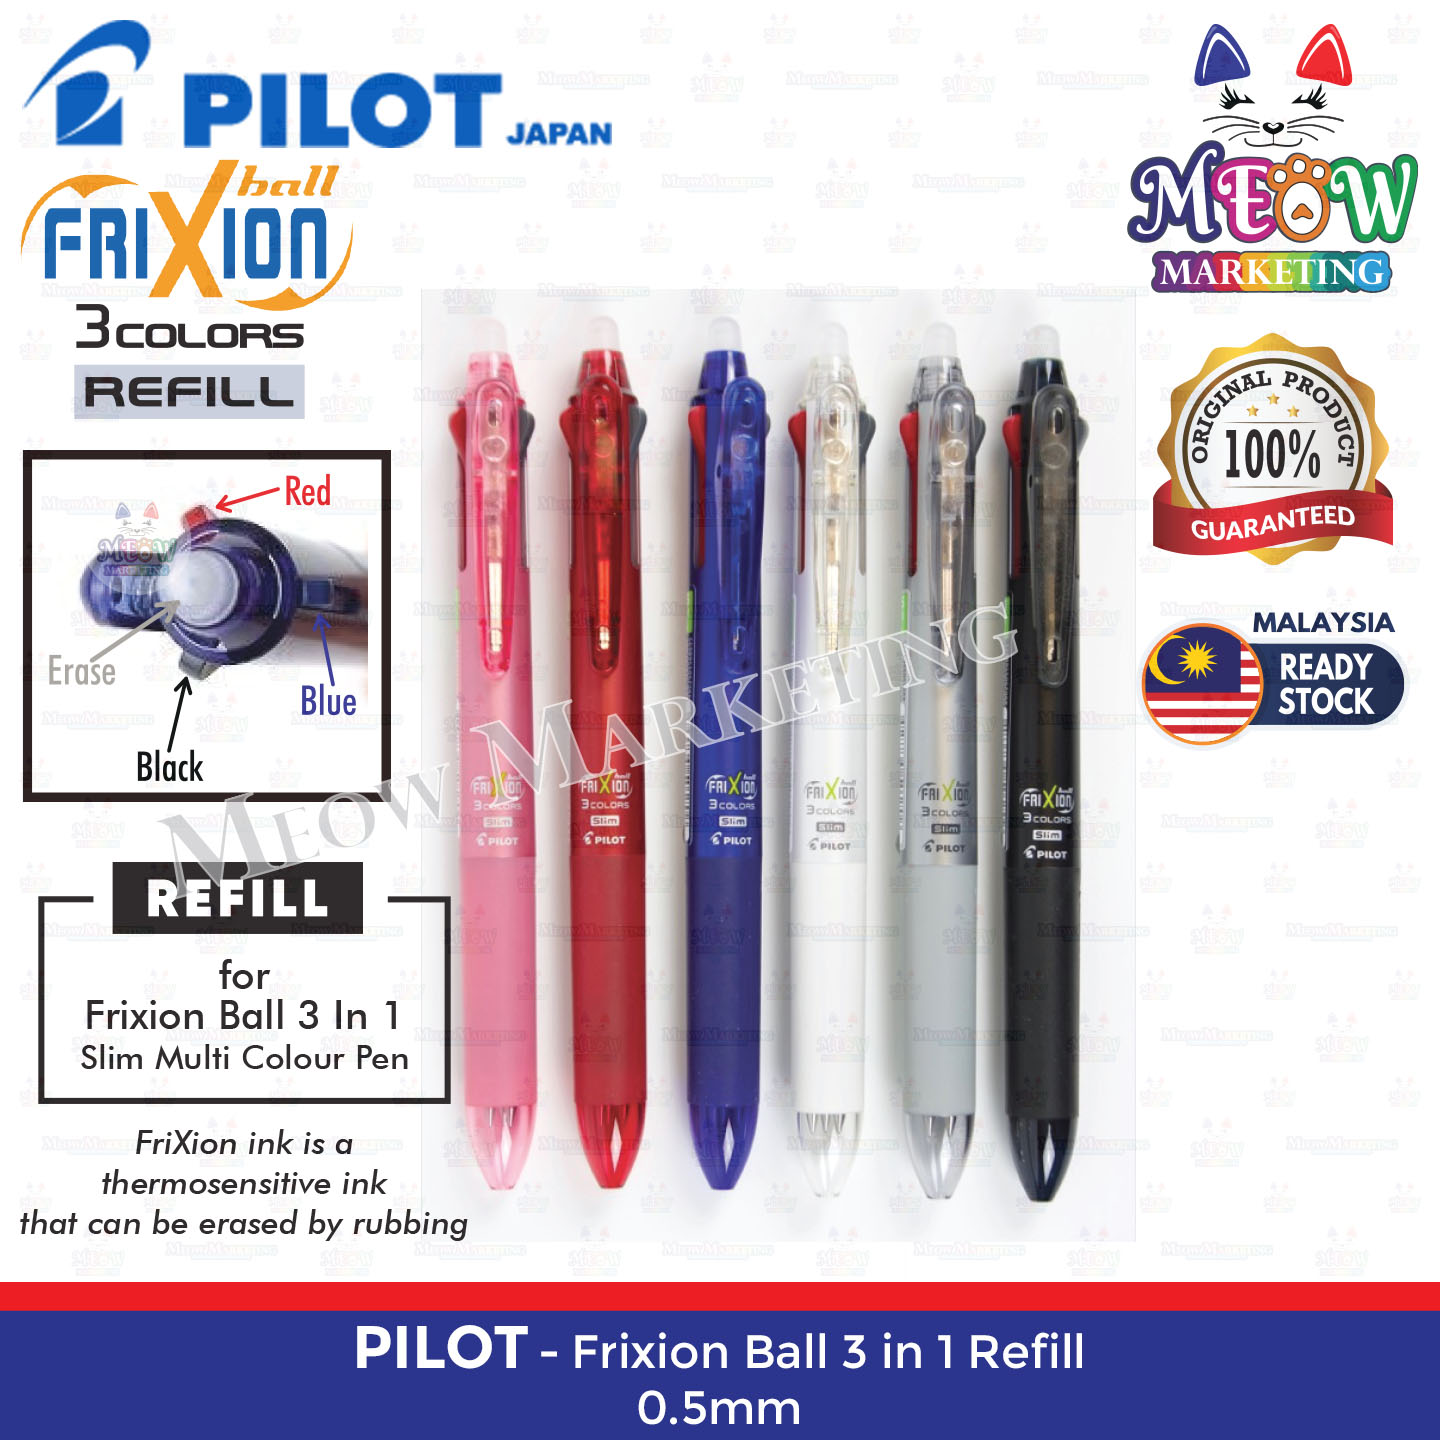 Pilot Frixion Ball 3 In 1 Multi Colour Refill - 0.5mm